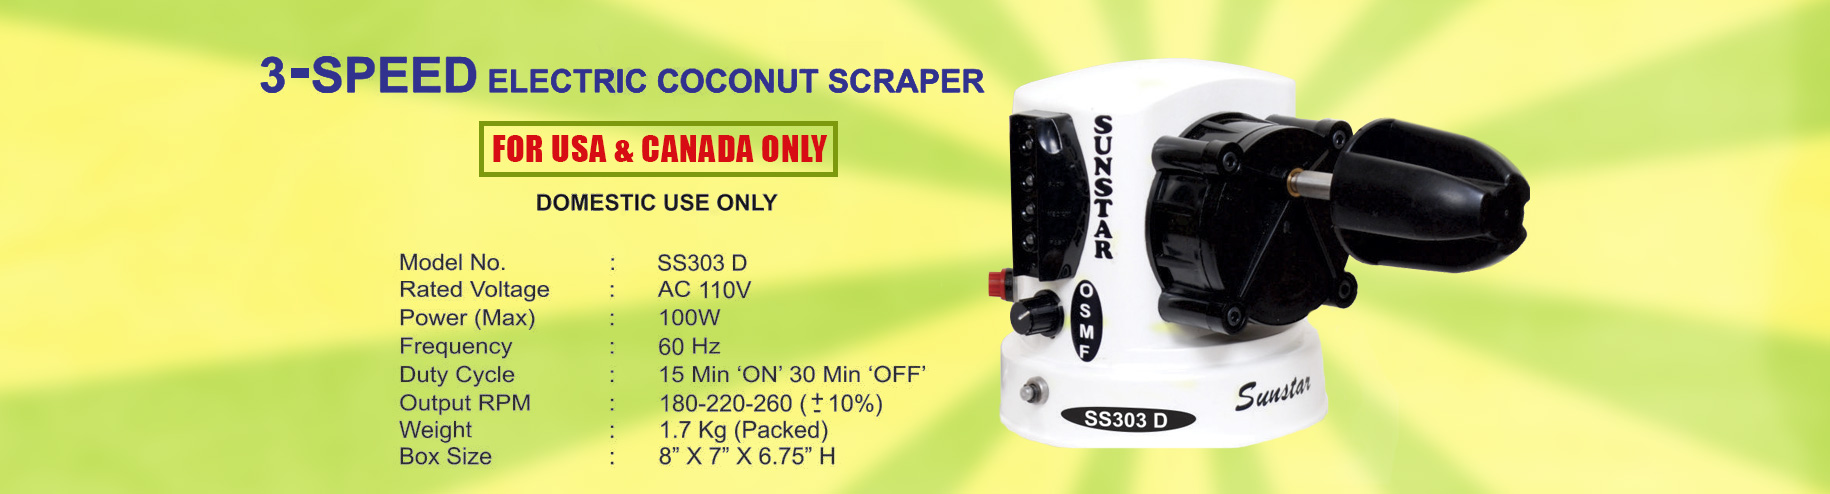 Electric Coconut Scraper by Sun Industries, Mumbai 